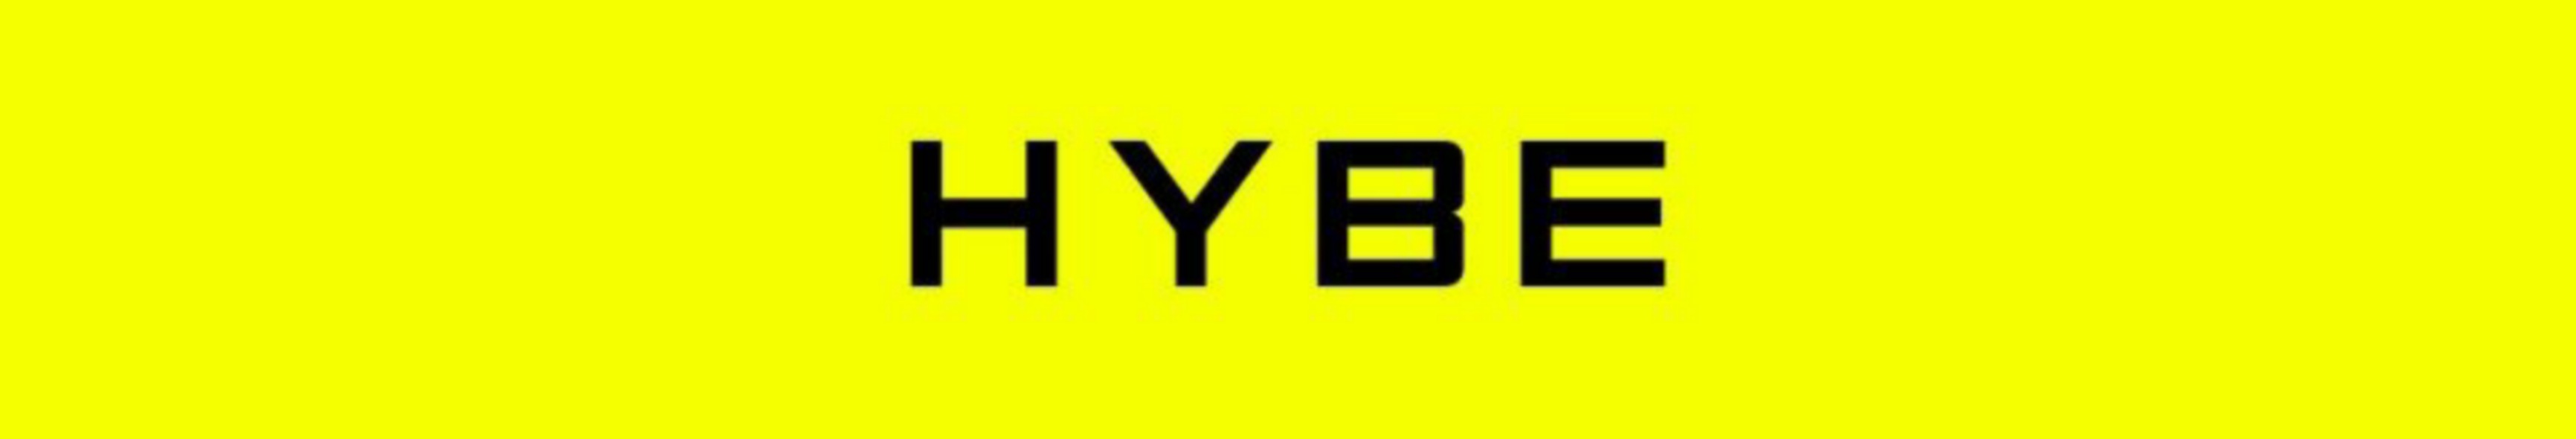 [HYBE Labels] ยอดขายศิลปิน HYBE บน Oricon ในครึ่งปีแรก | อัปเดตการเดบิว